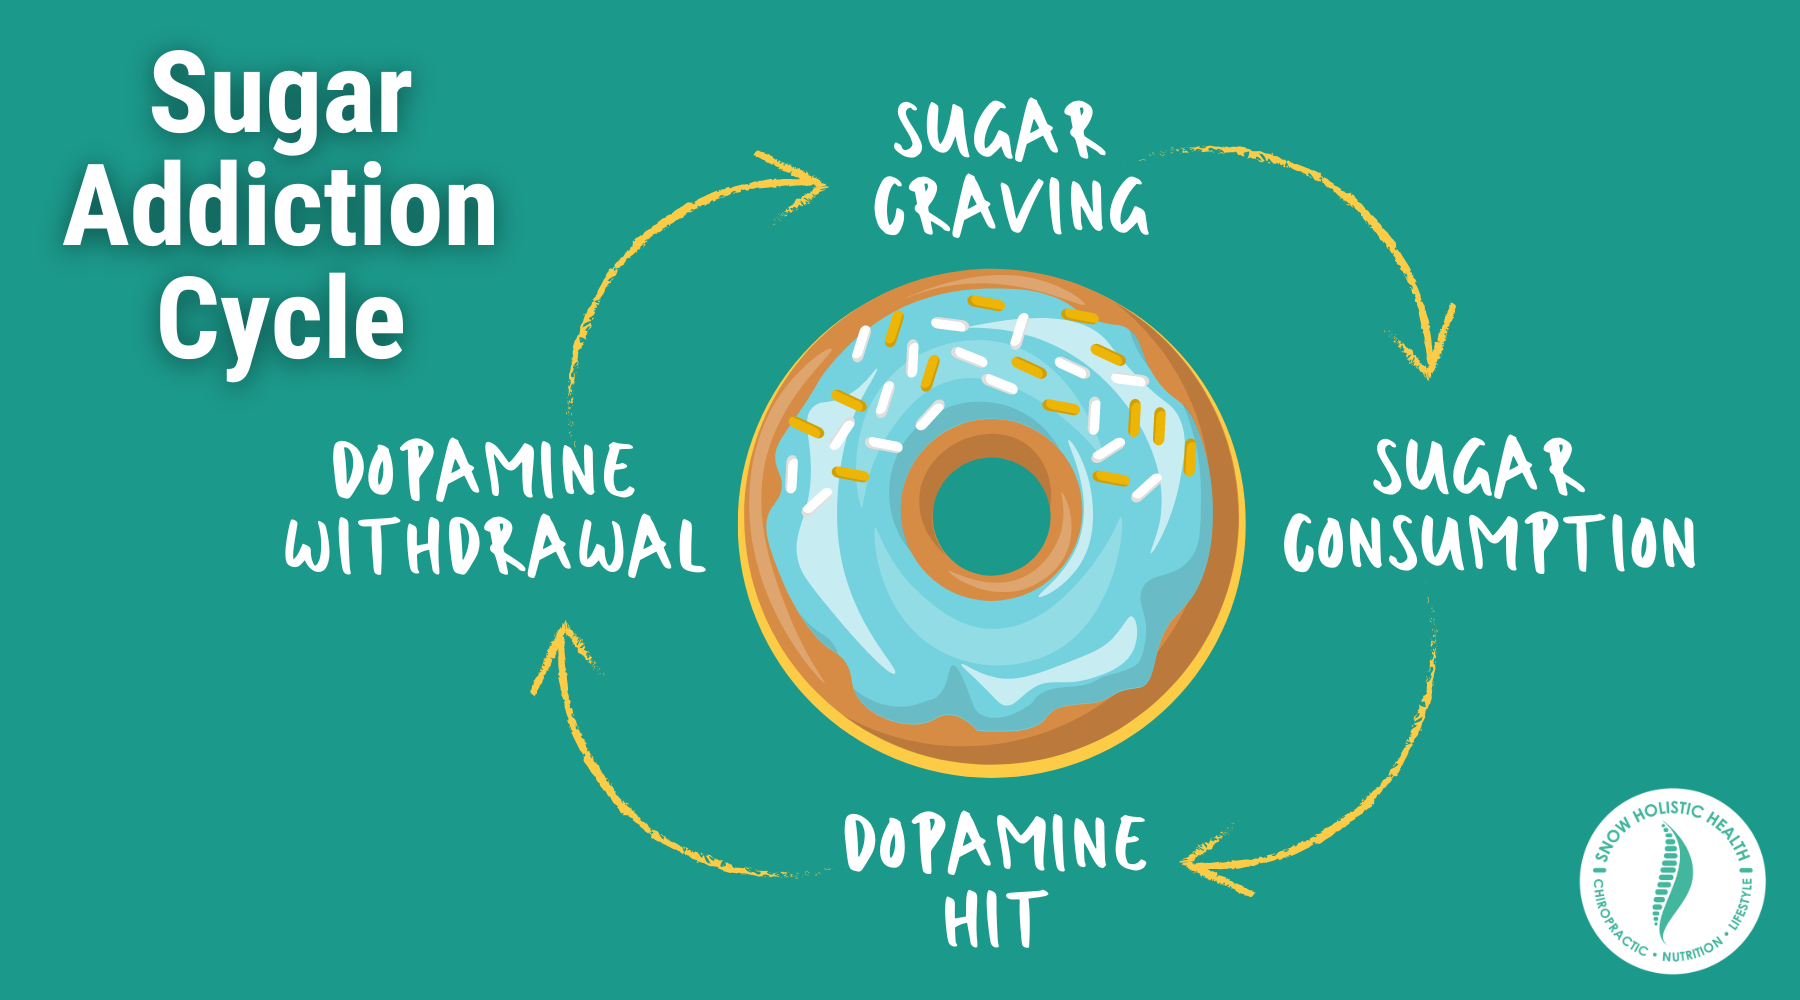 Sugar consumption and addiction